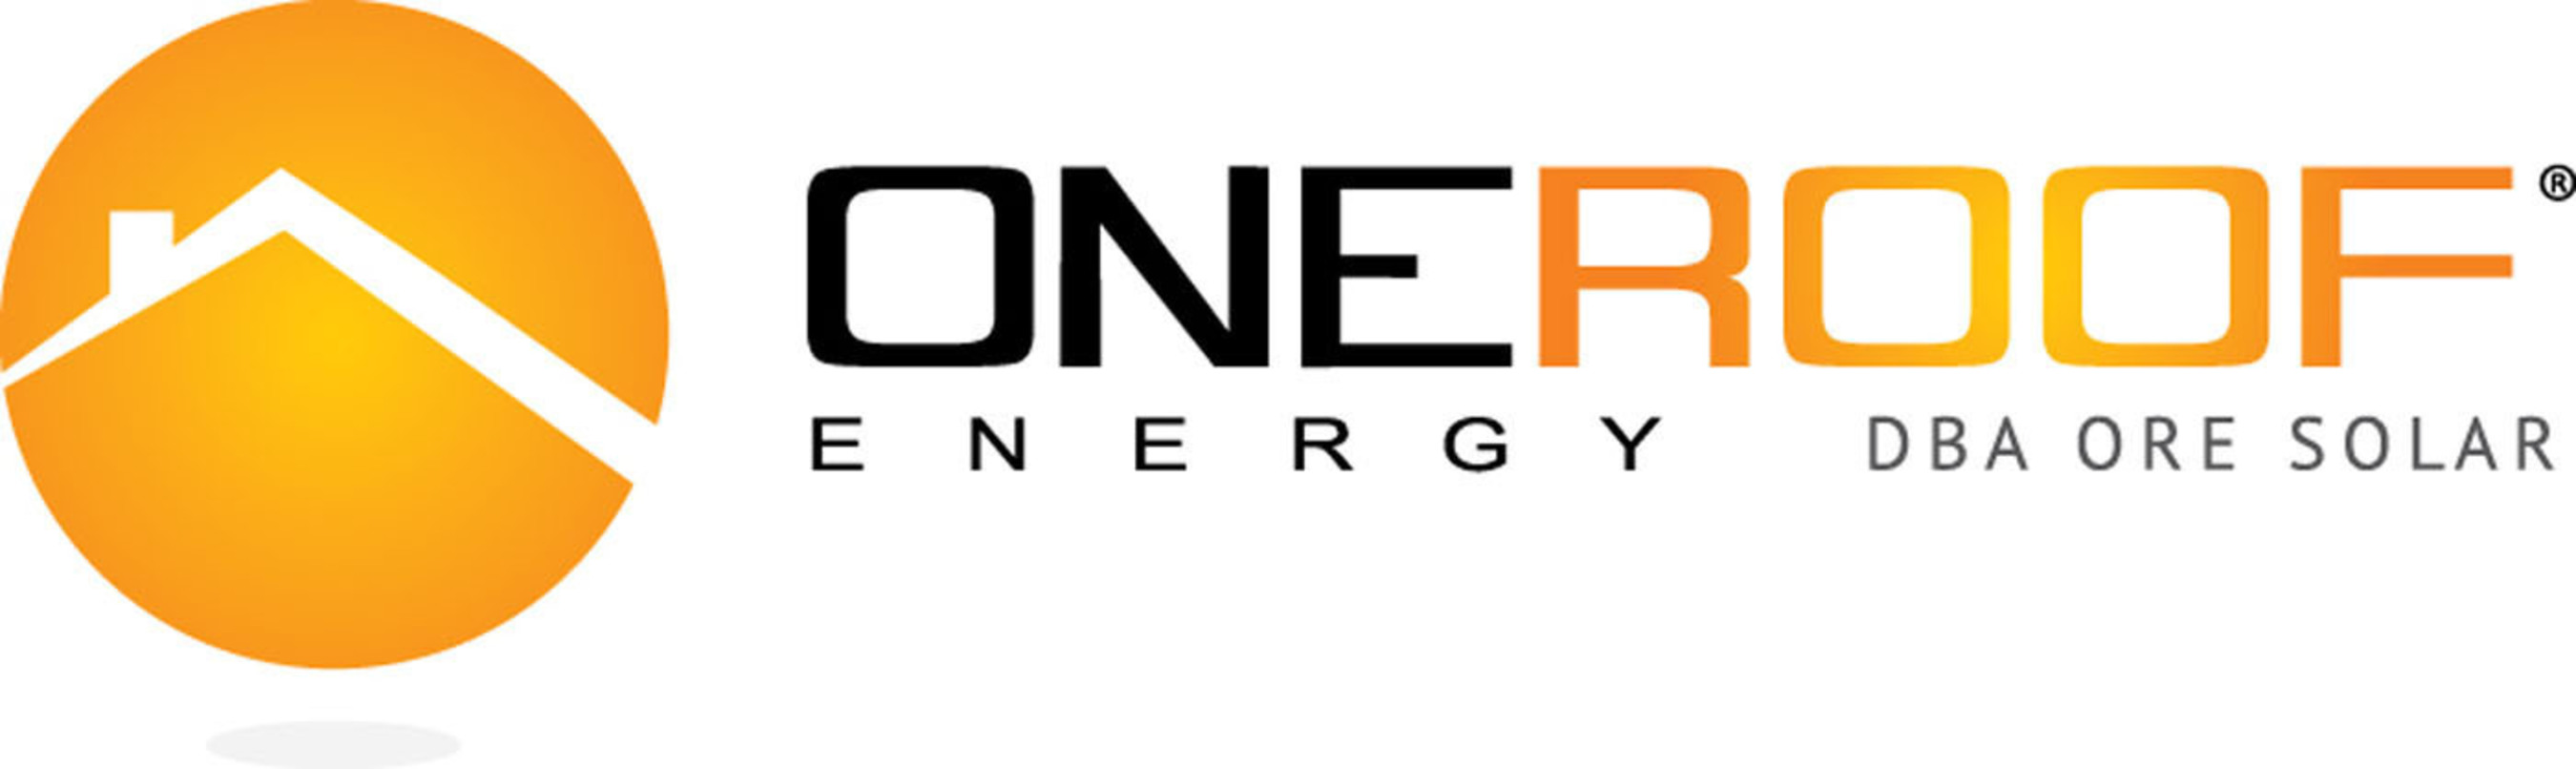 OneRoof Energy, Inc. Logo. (PRNewsFoto/OneRoof Energy, Inc.) (PRNewsFoto/ONEROOF ENERGY, INC.)